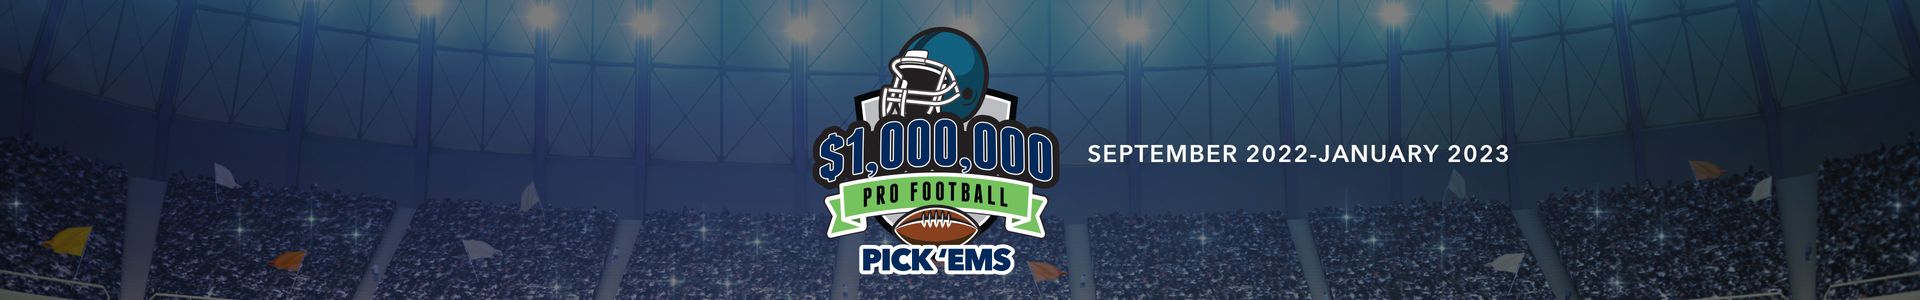 $1,000,000 Pro Football Pick'Ems